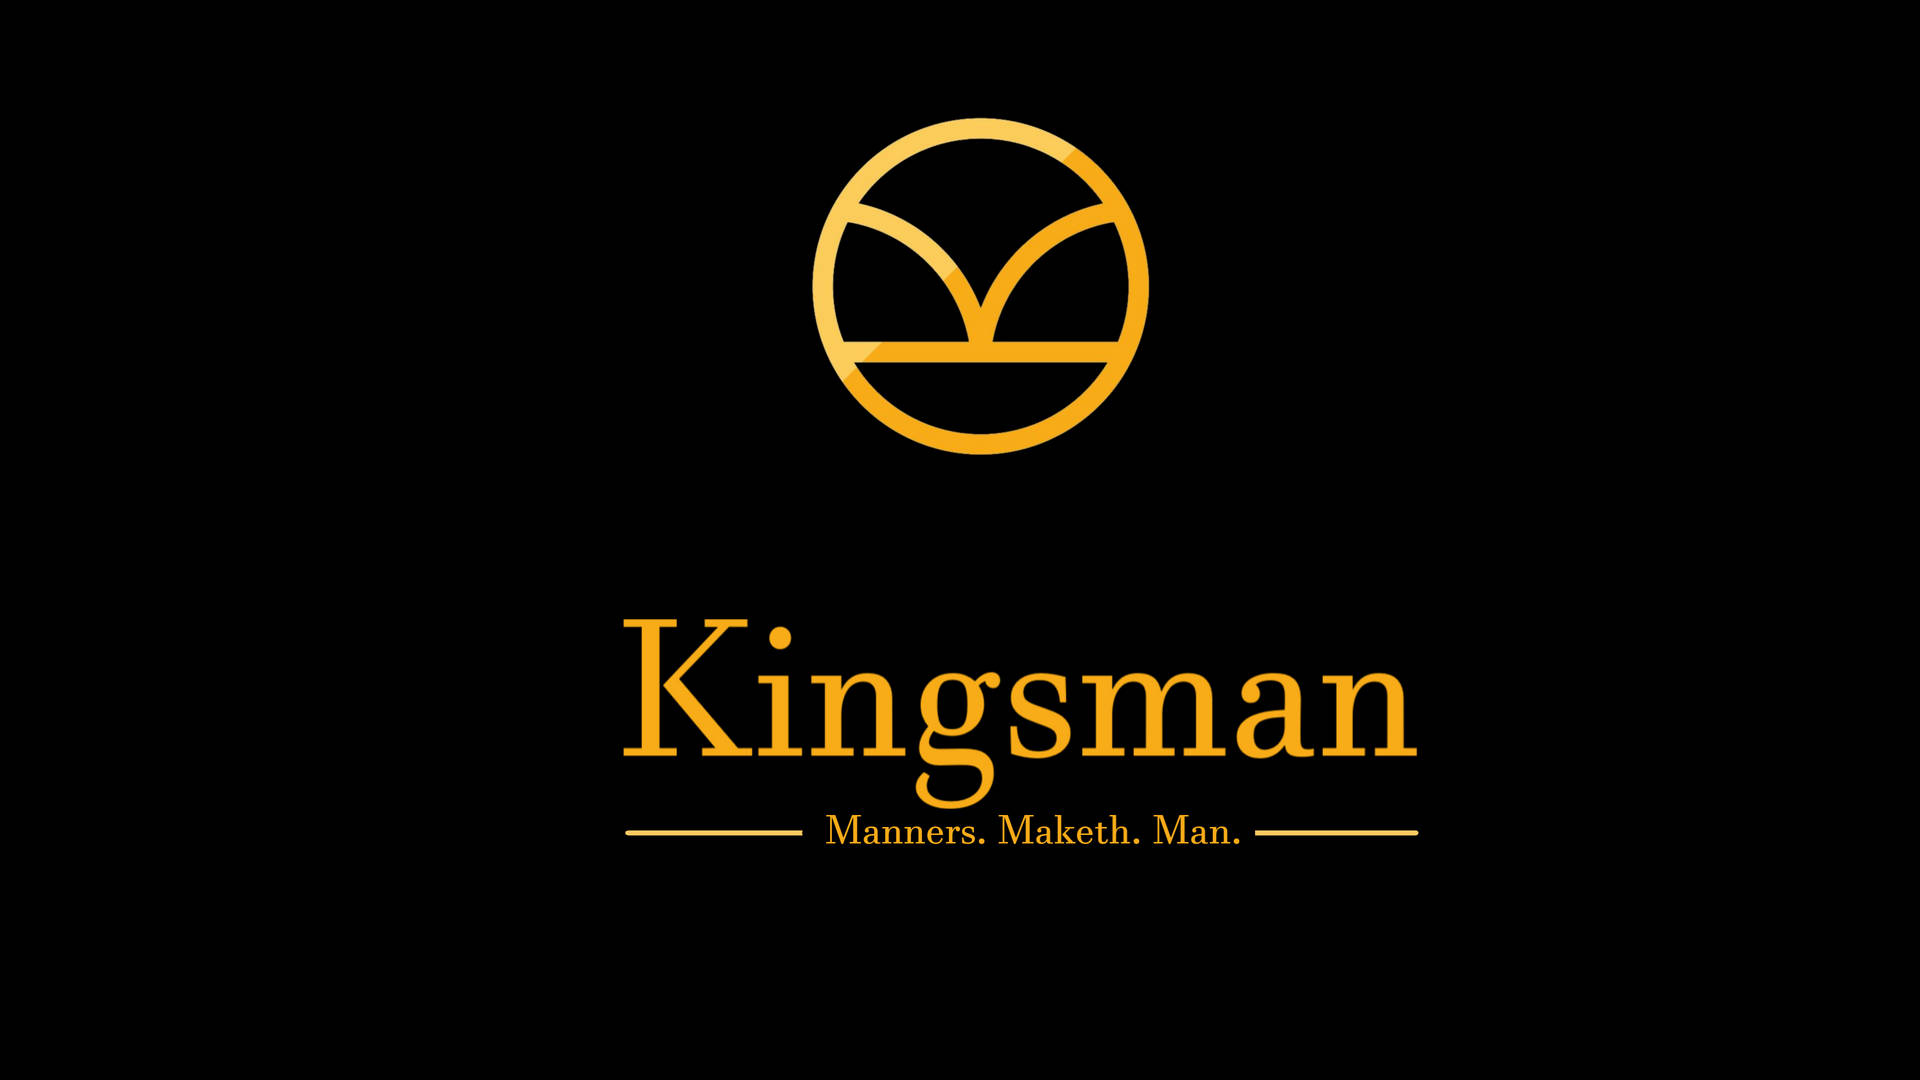 Action-loaded Posture Of A Kingsman Agent Background